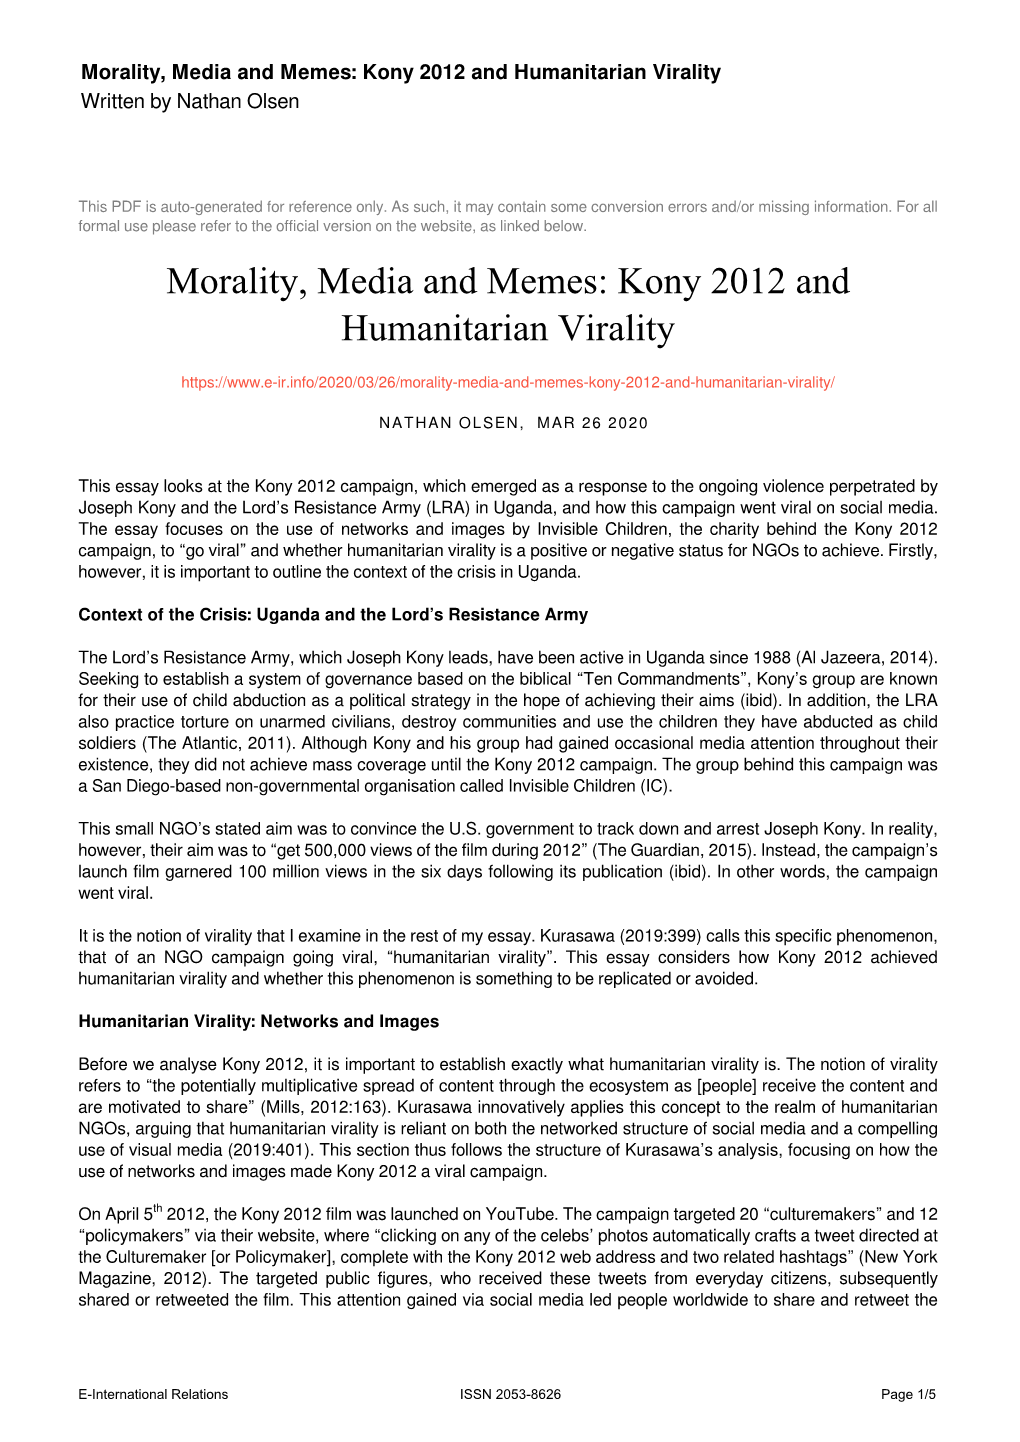 Kony 2012 and Humanitarian Virality Written by Nathan Olsen